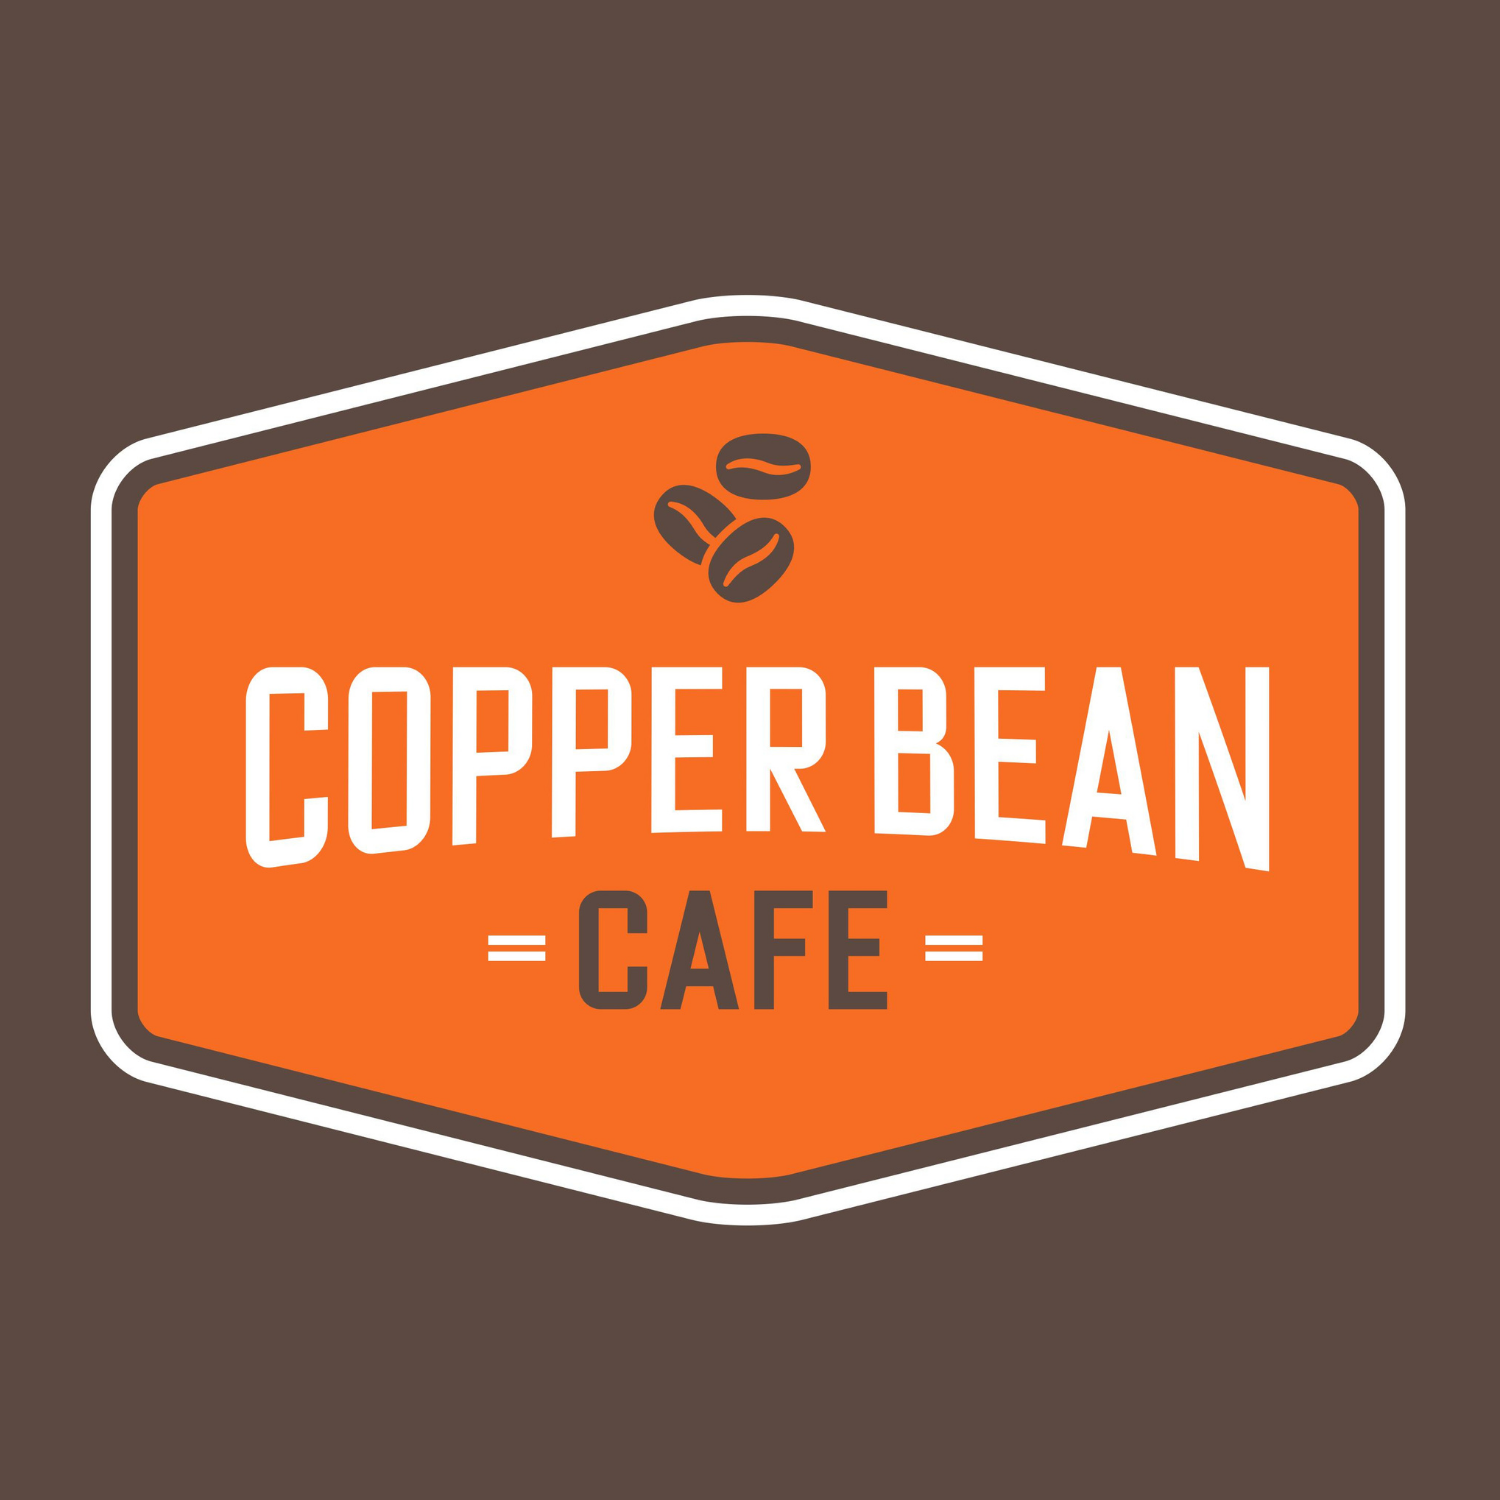 Copper Bean Cafe